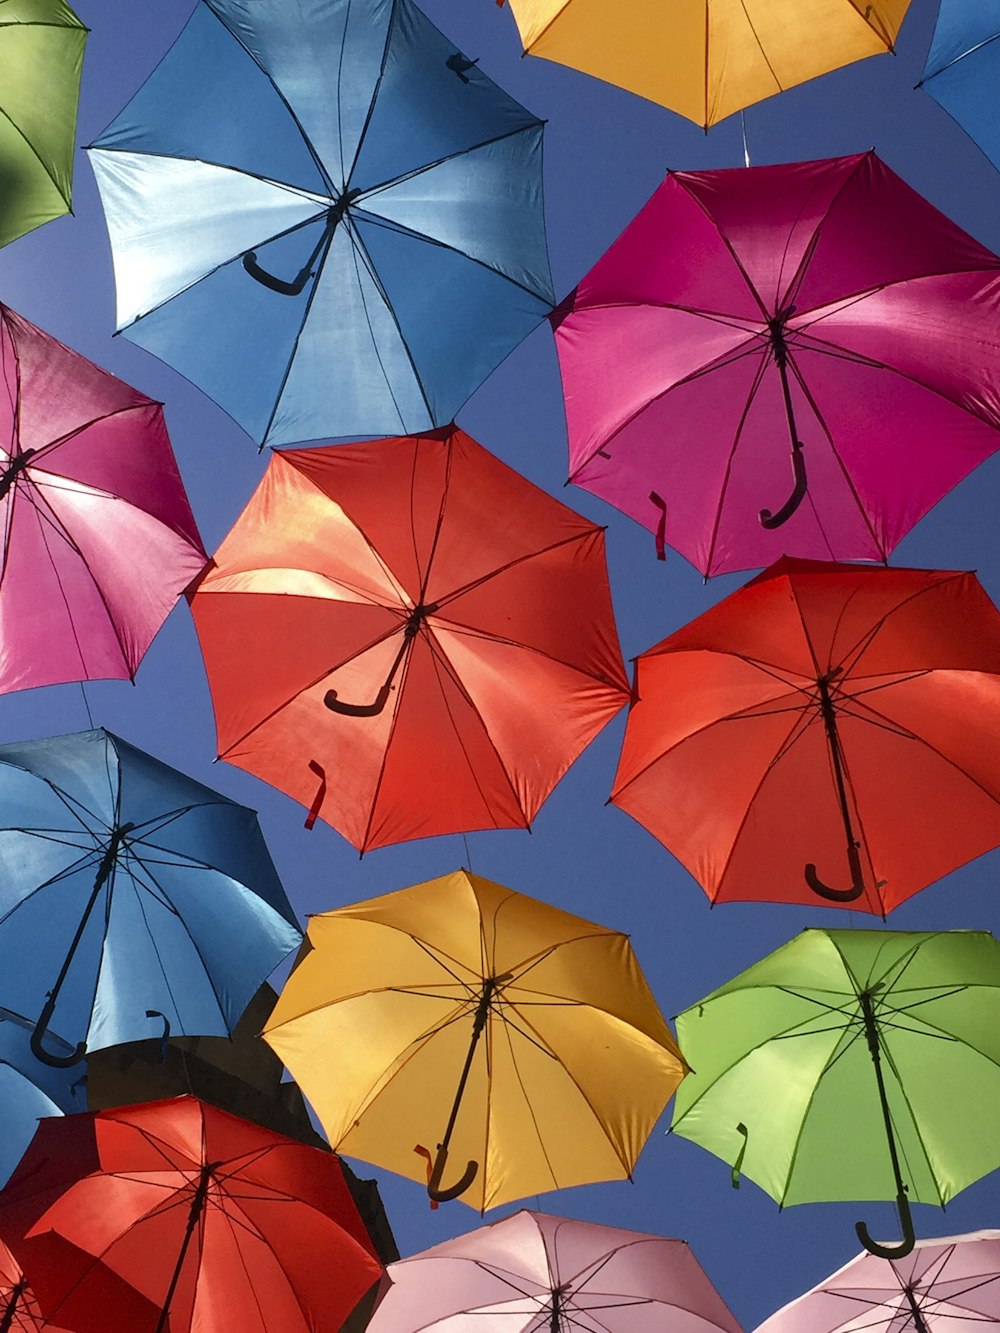 assorted-colored umbrella decor at daytime